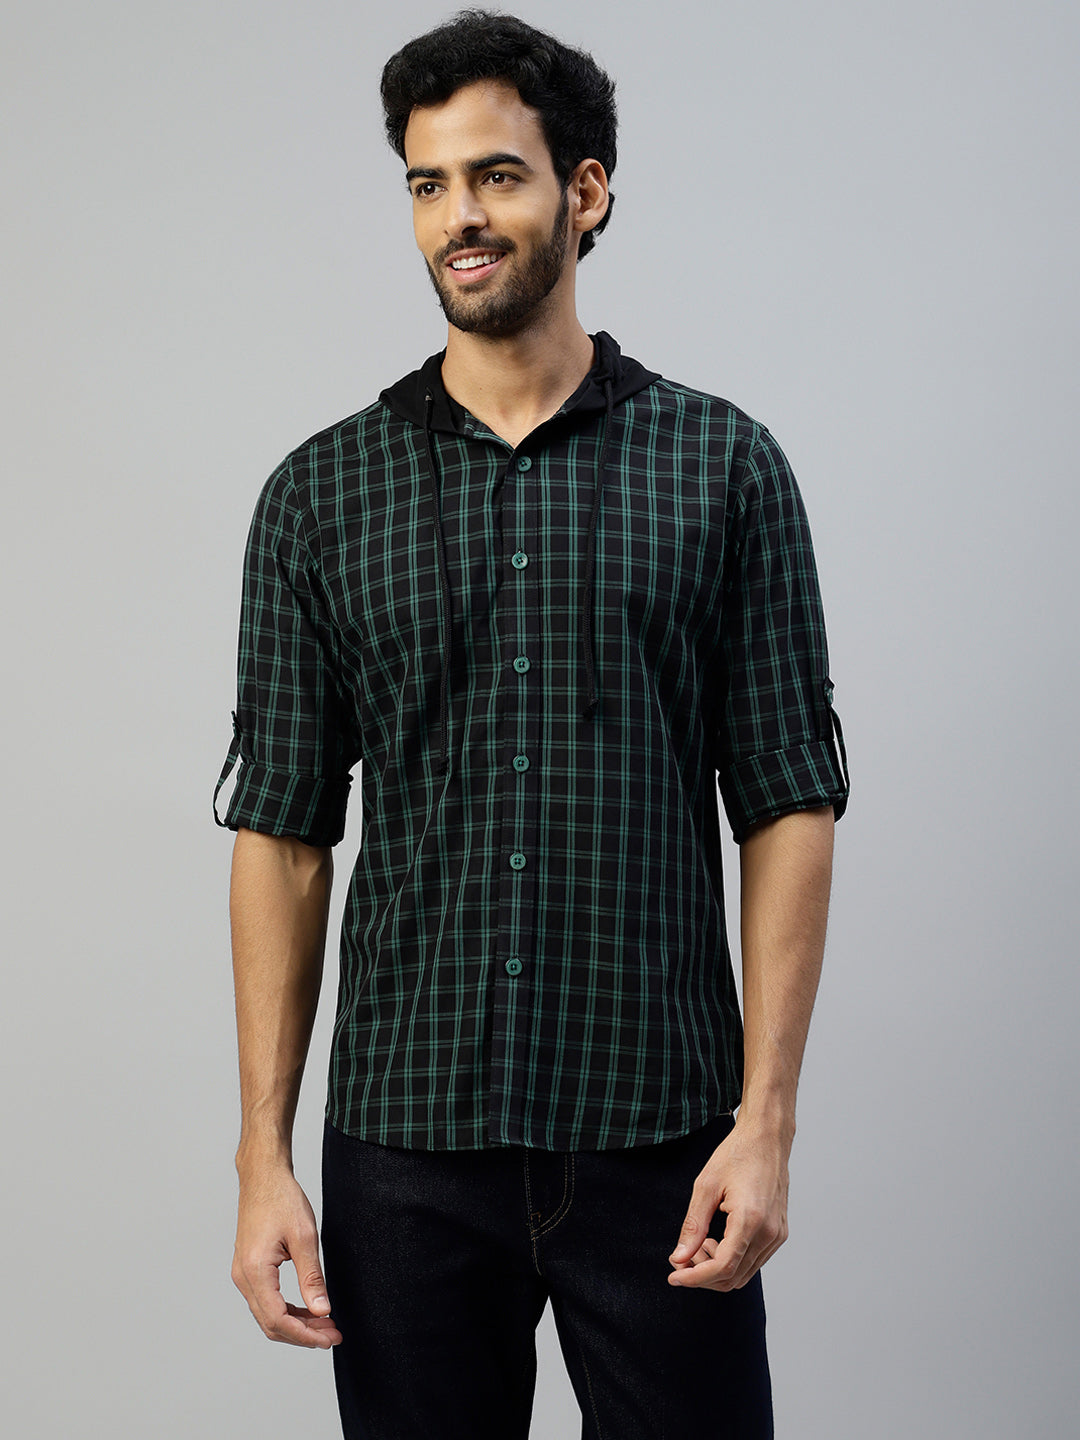 Don Vino Men's Black & Green Hoodie Shirt